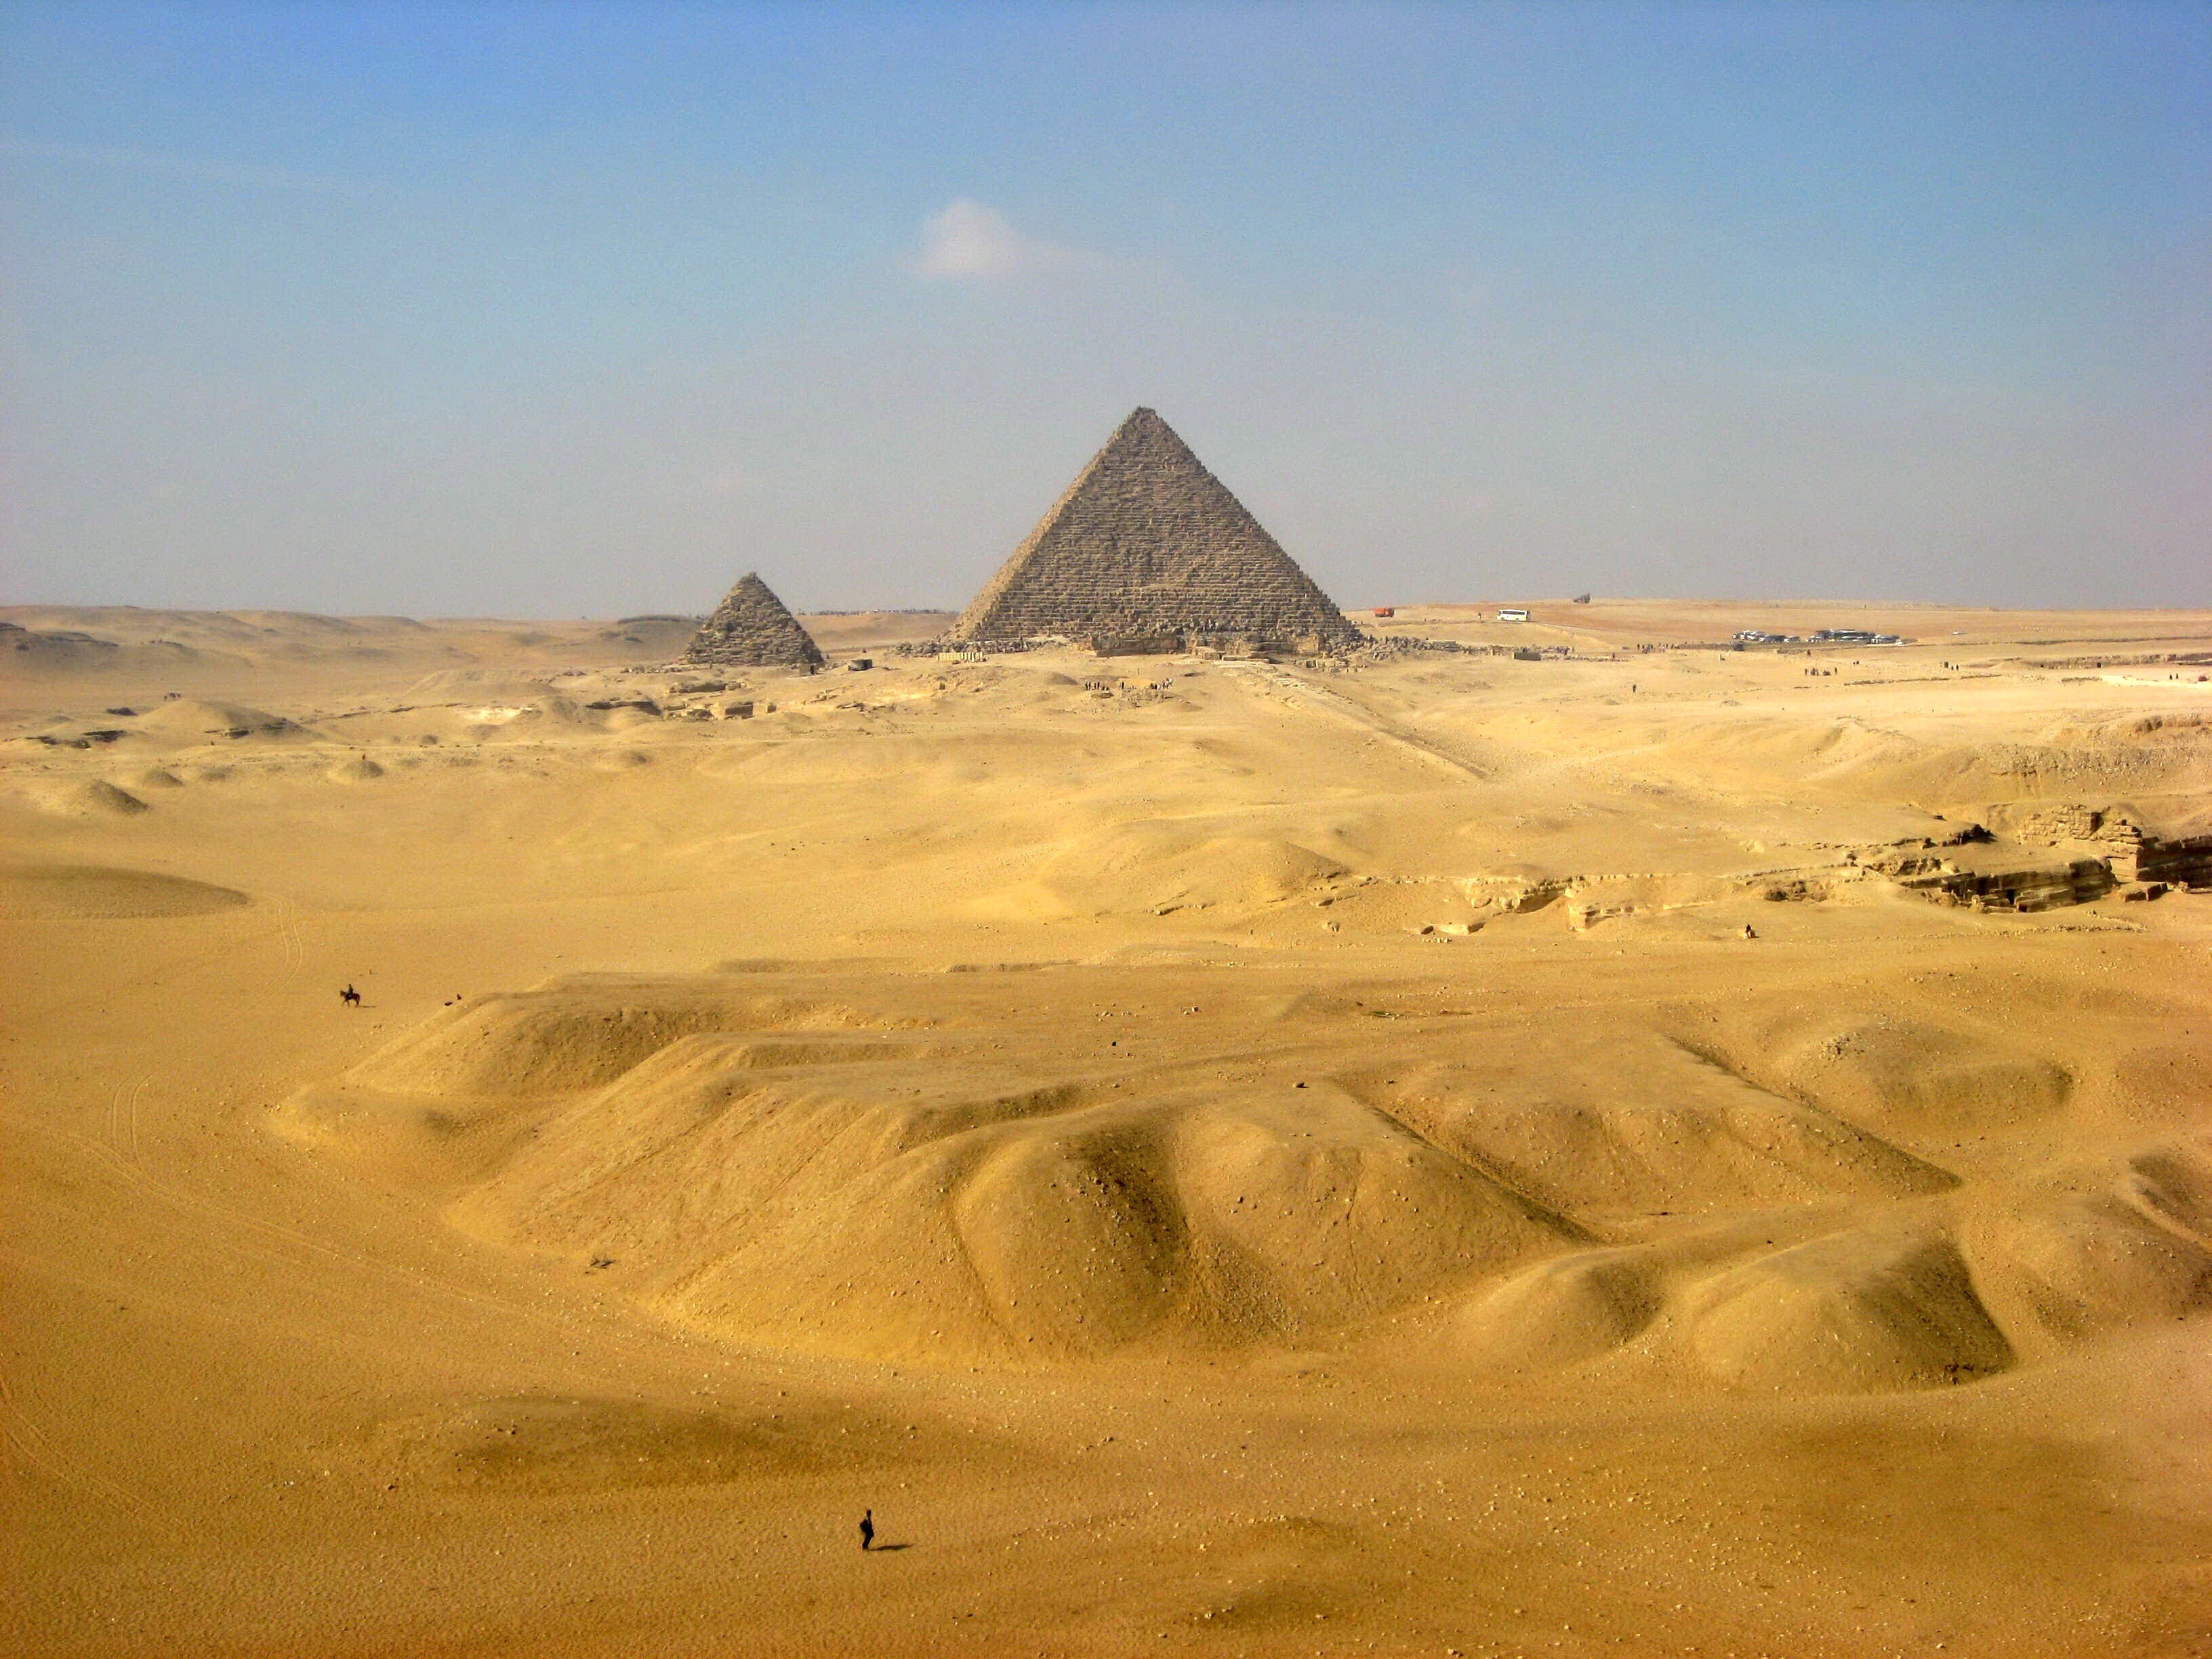 expansive-desert-with-pyramid-2022-11-02-16-20-39-utc-7998.jpg